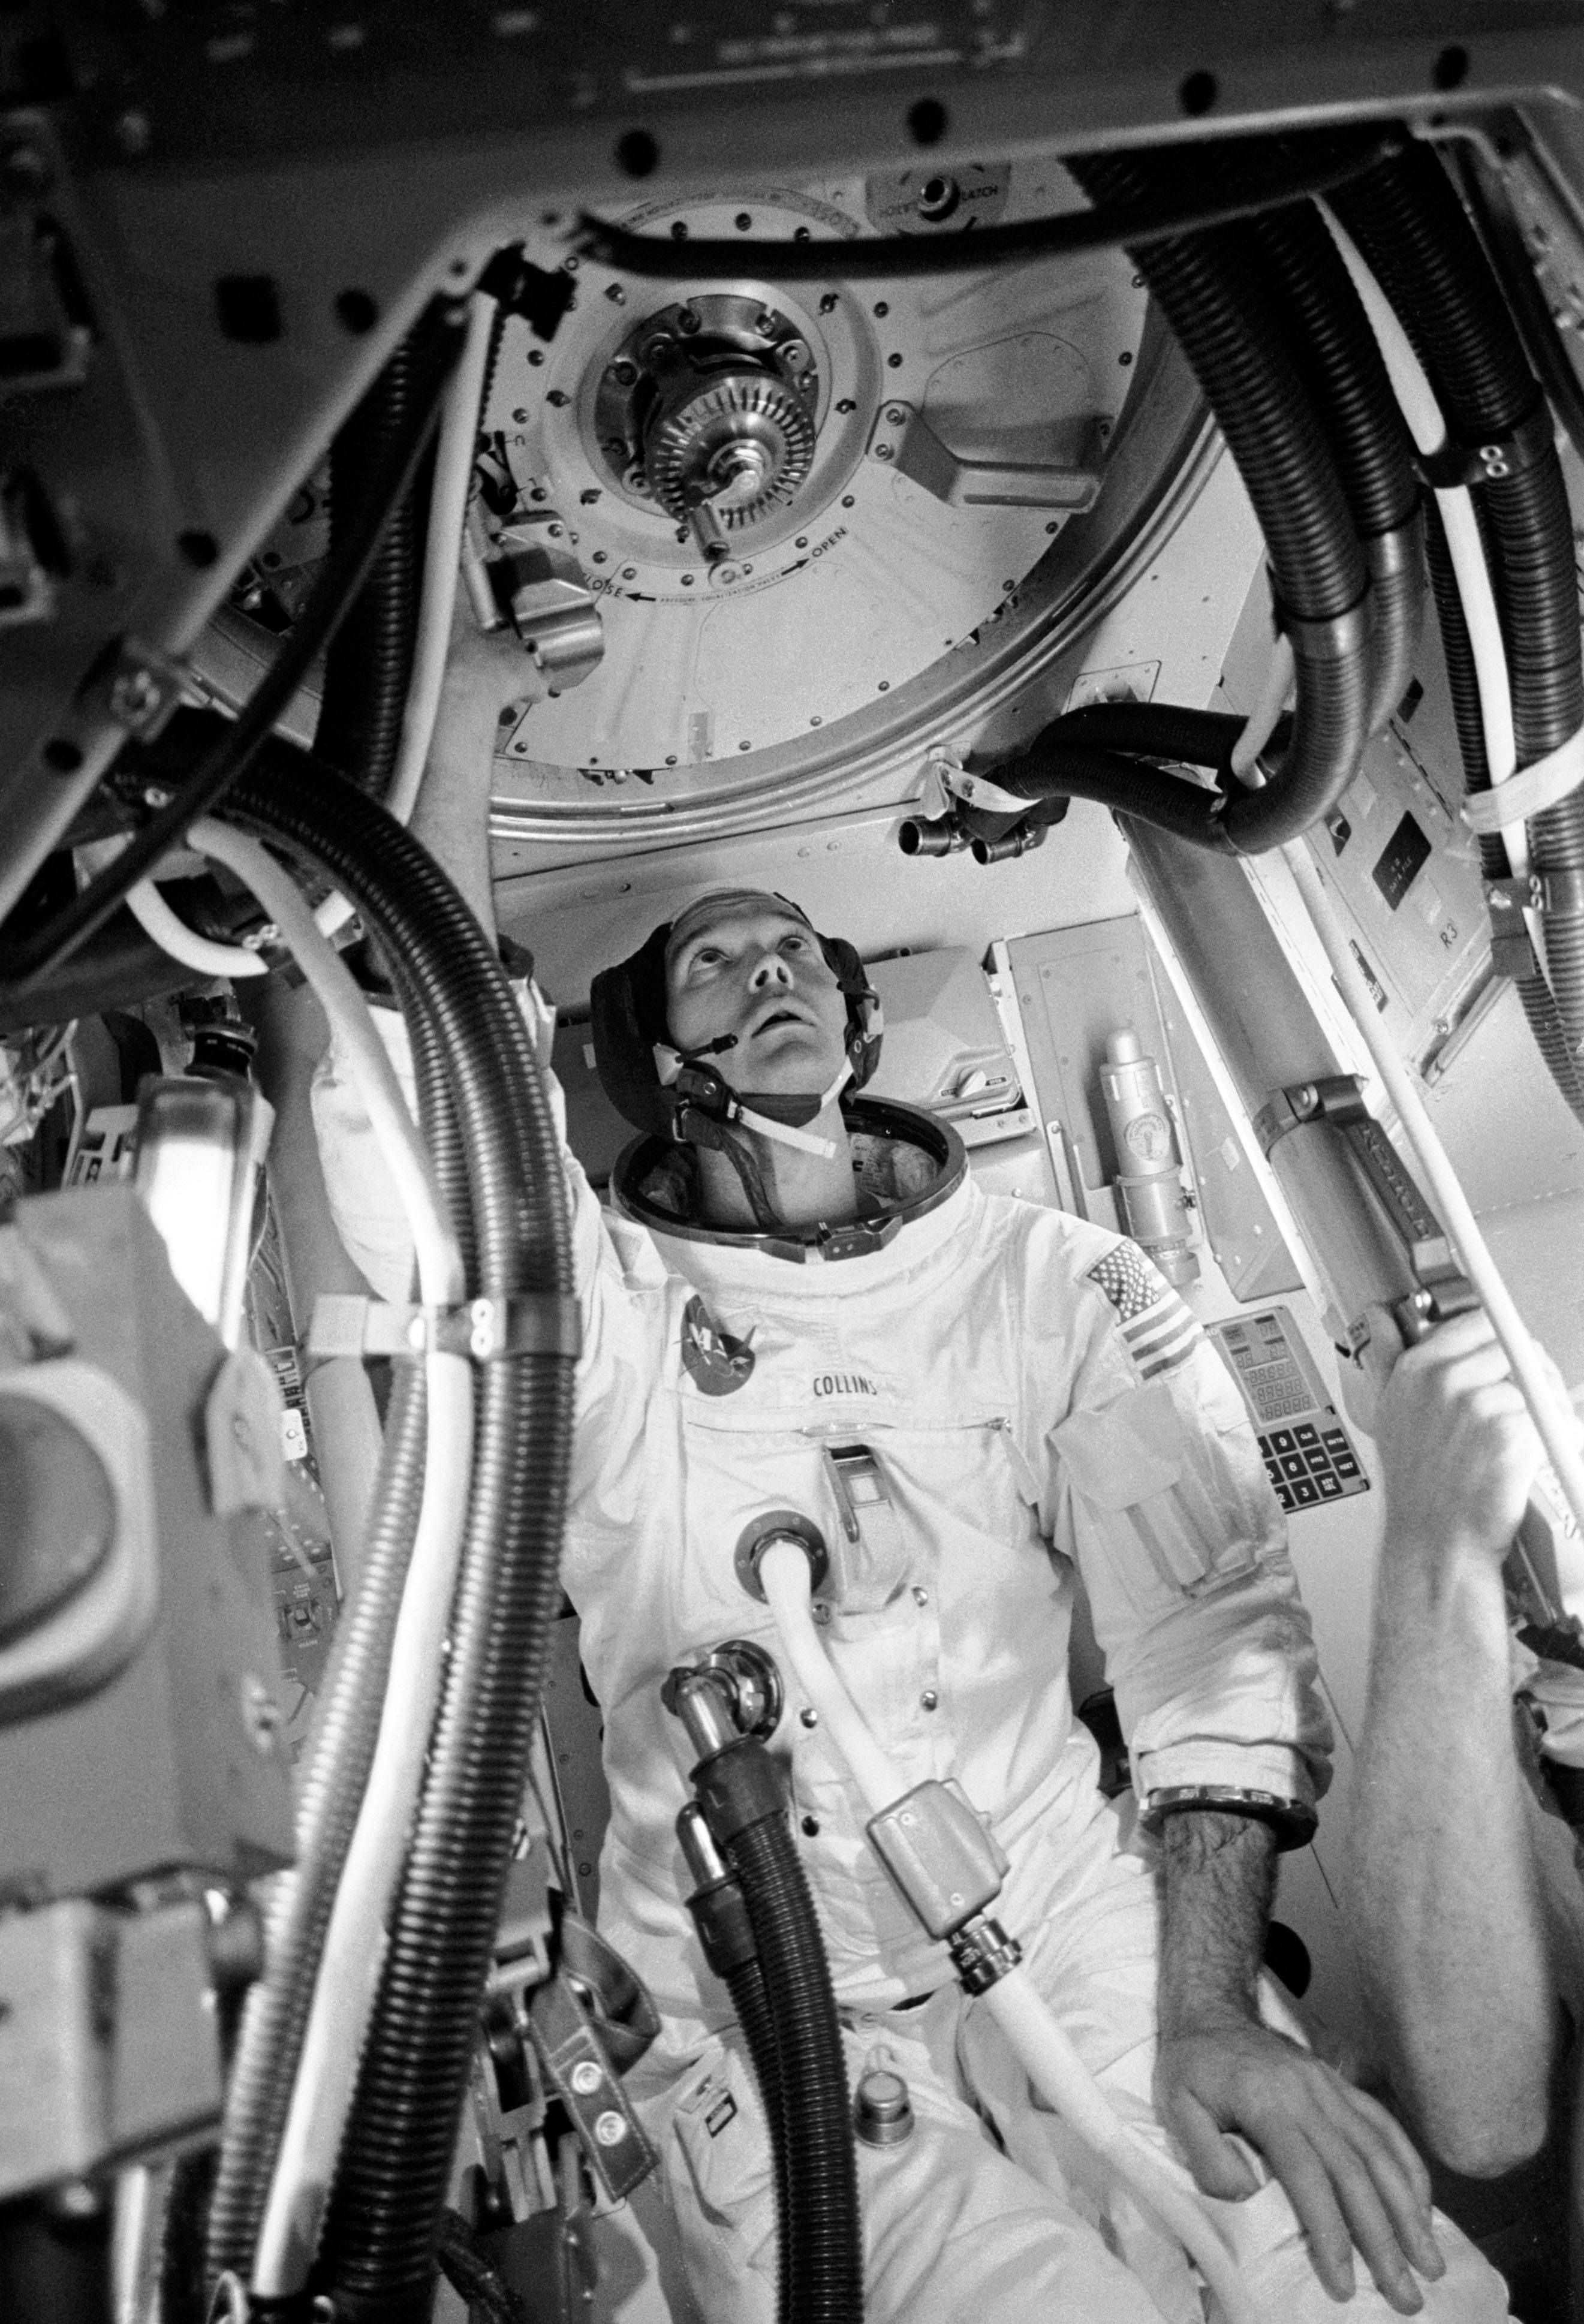 Michael Collins practices procedures with the Apollo docking mechanism